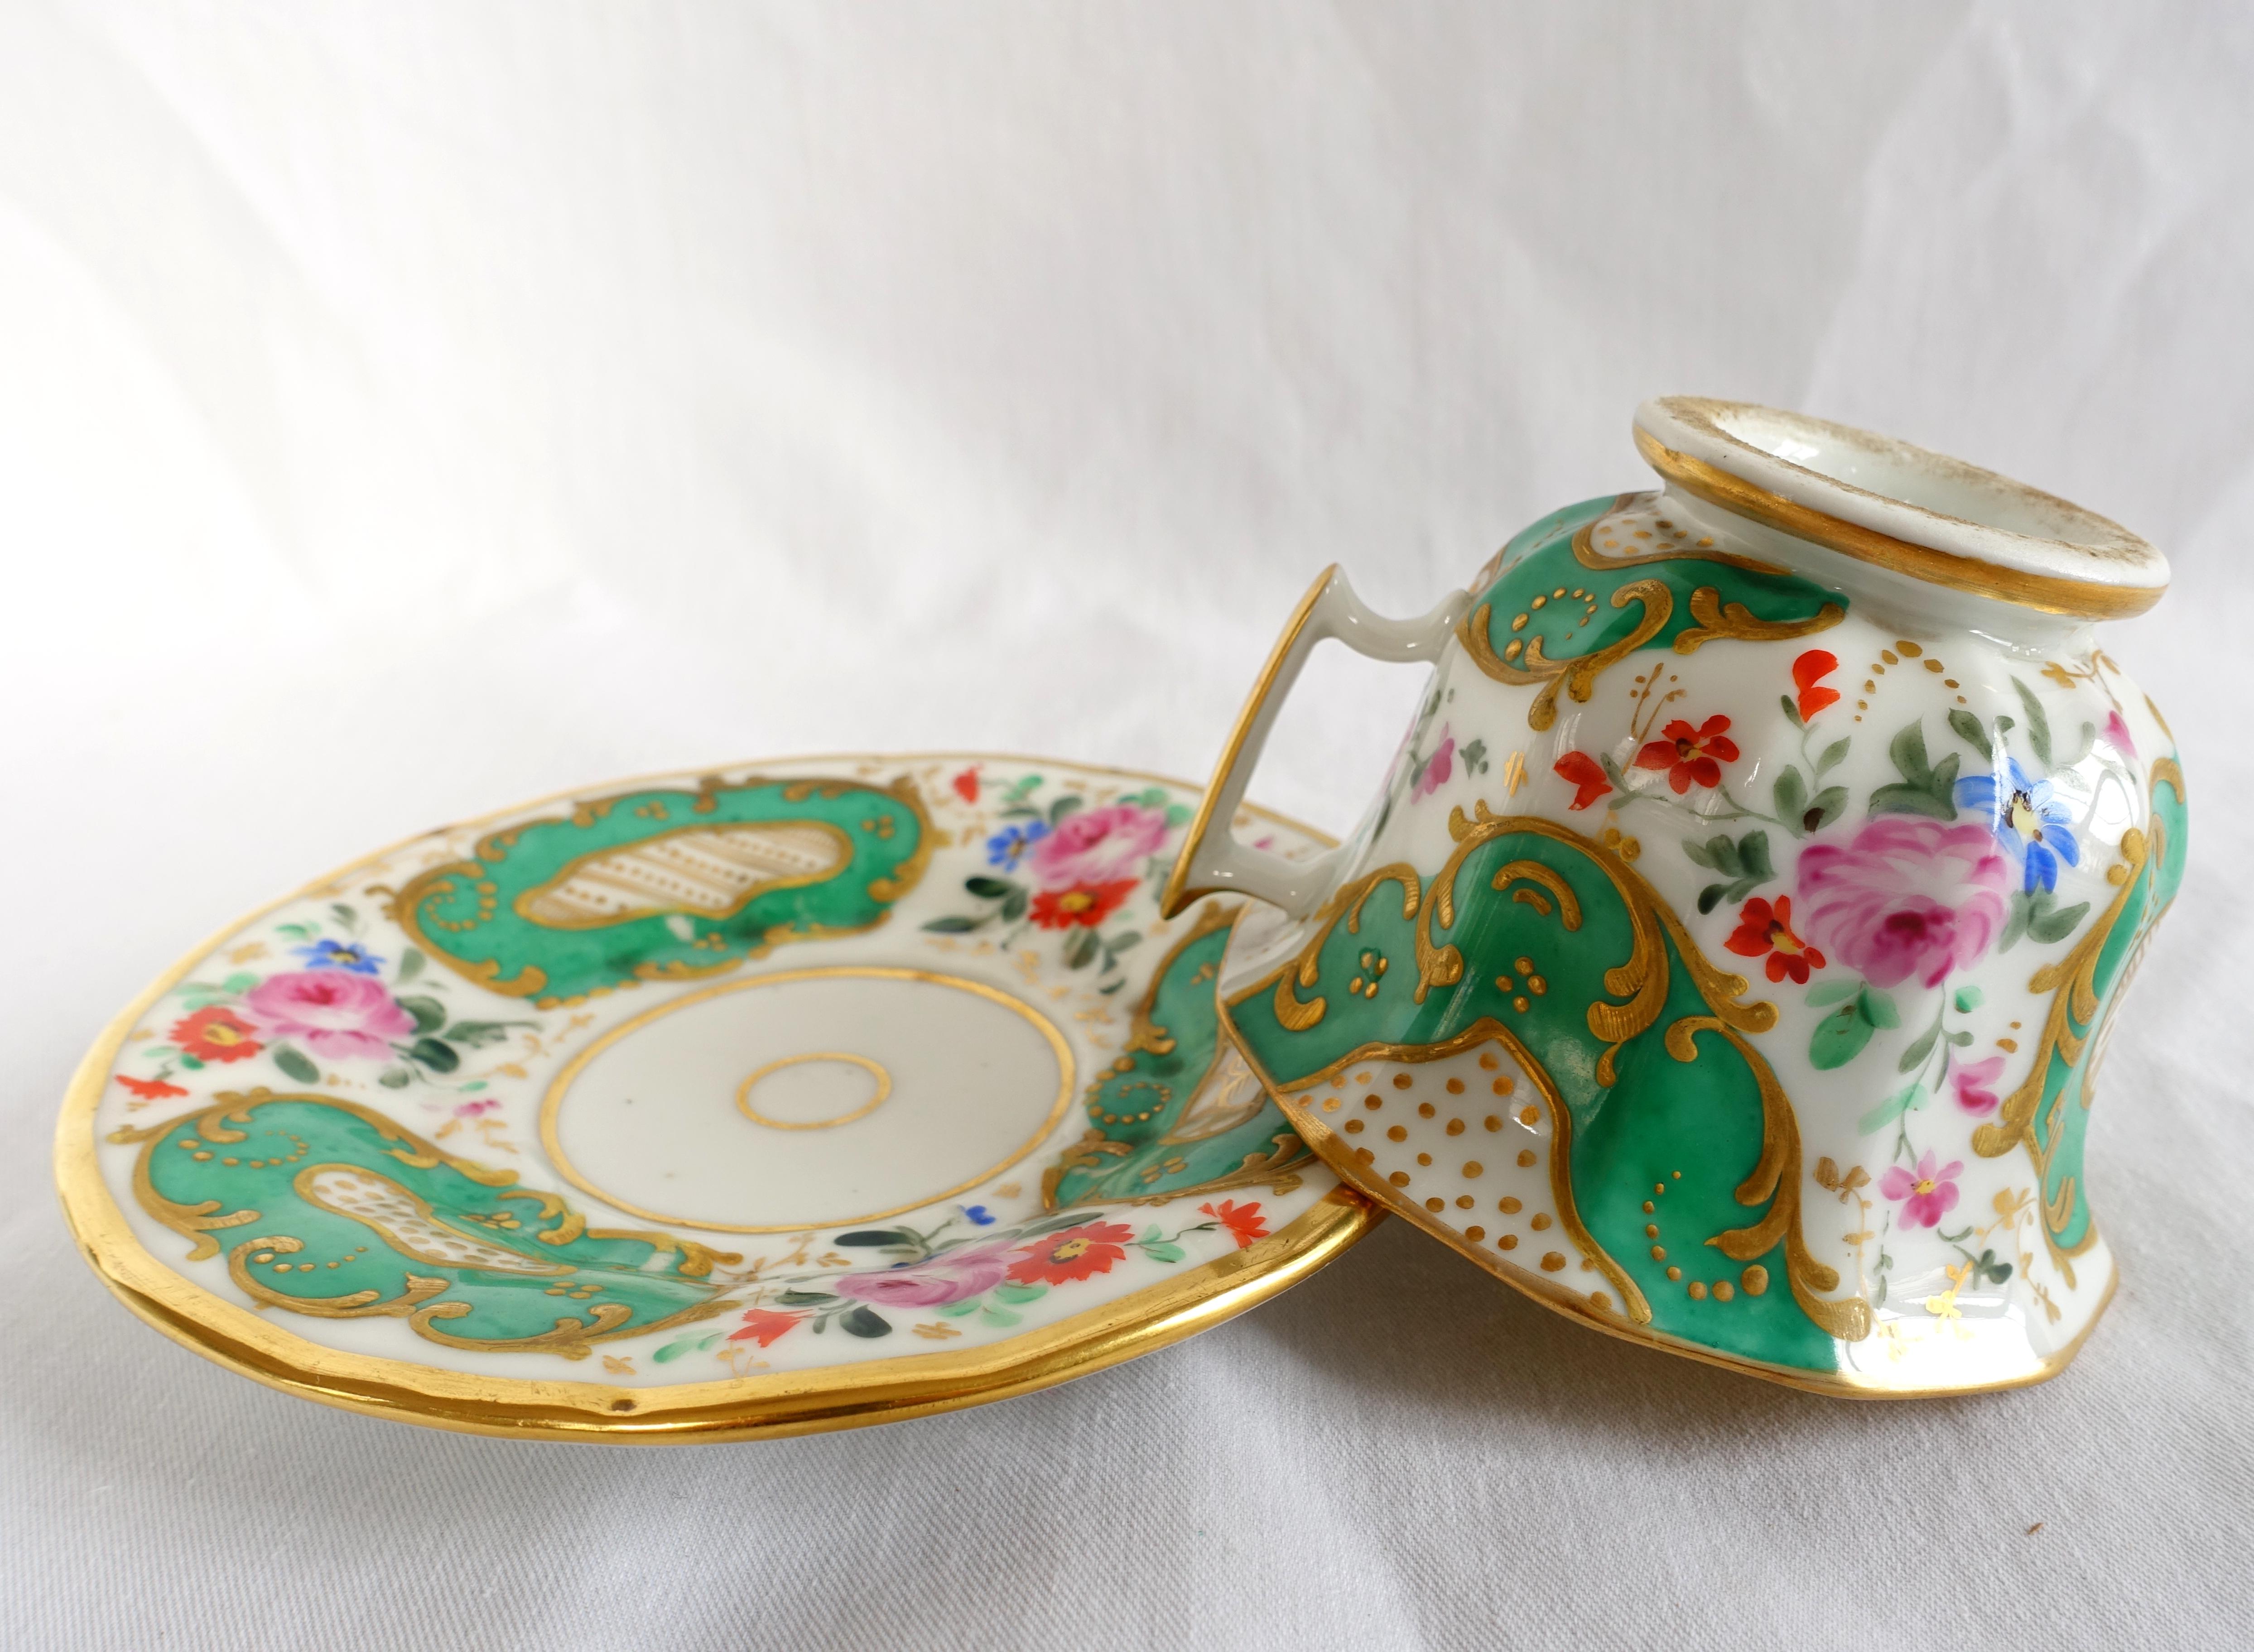 Antique French Paris porcelain coffee set for 6 - cups & saucers - 19th century 1